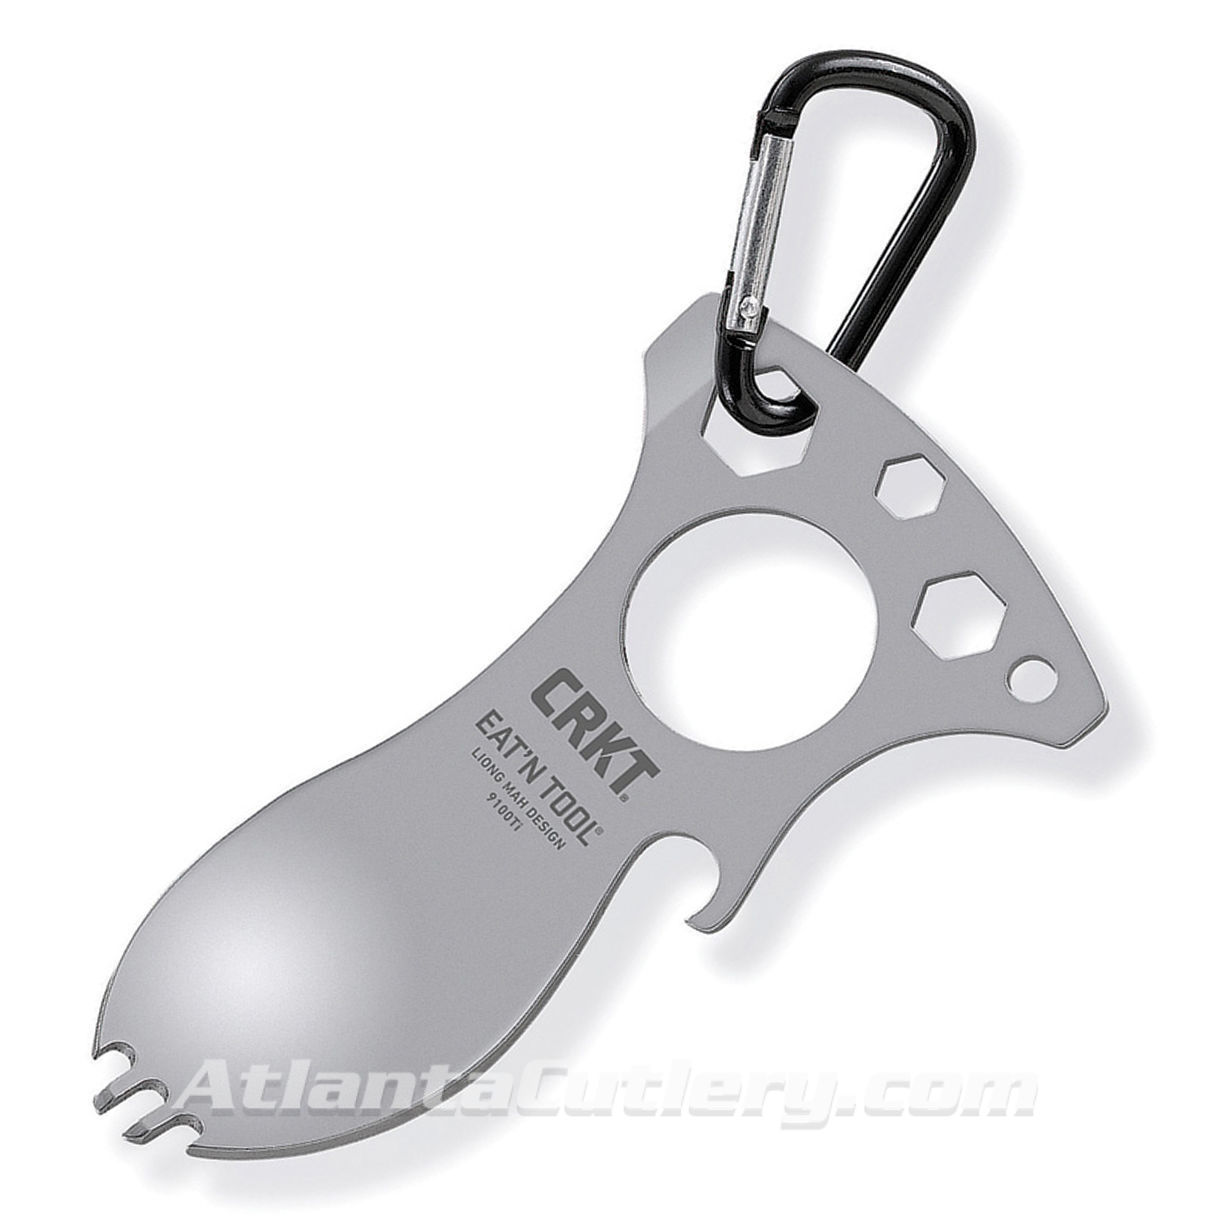 CRKT Titanium Eat’n Tool outdoor multi-tool has fork, spoon, bottle opener, screwdriver, 3 metric wrenches for emergency repairs